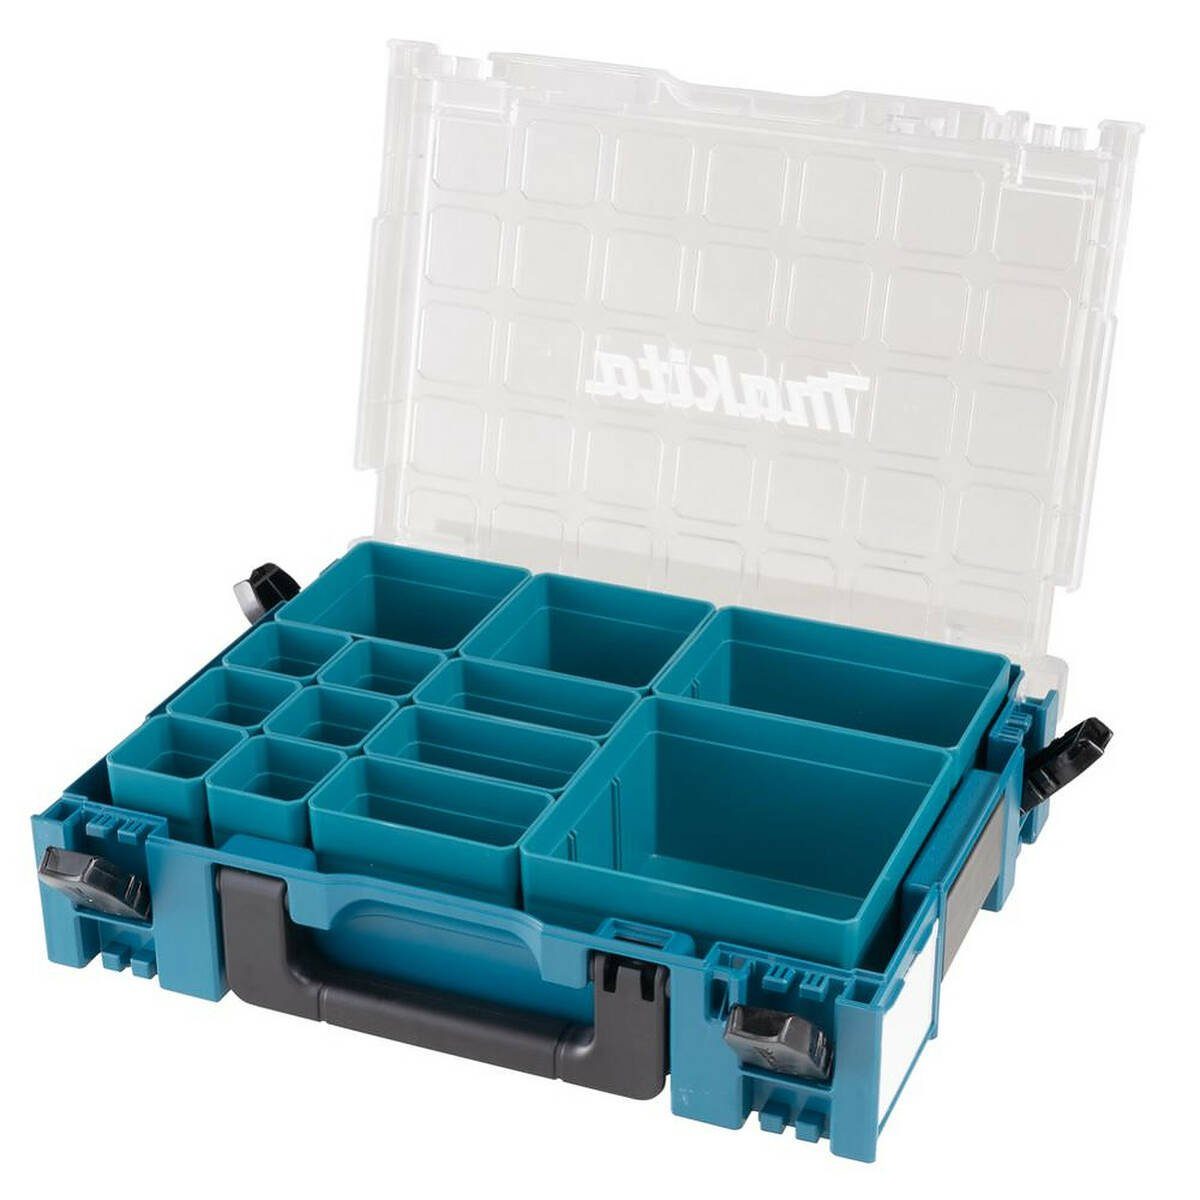 Boxen Boxen 191X80-2 mit Stapelbar, Etiketten-Set), Makita 13 und Werkzeugkoffer herausnehmbare (Set, herausnehmbaren